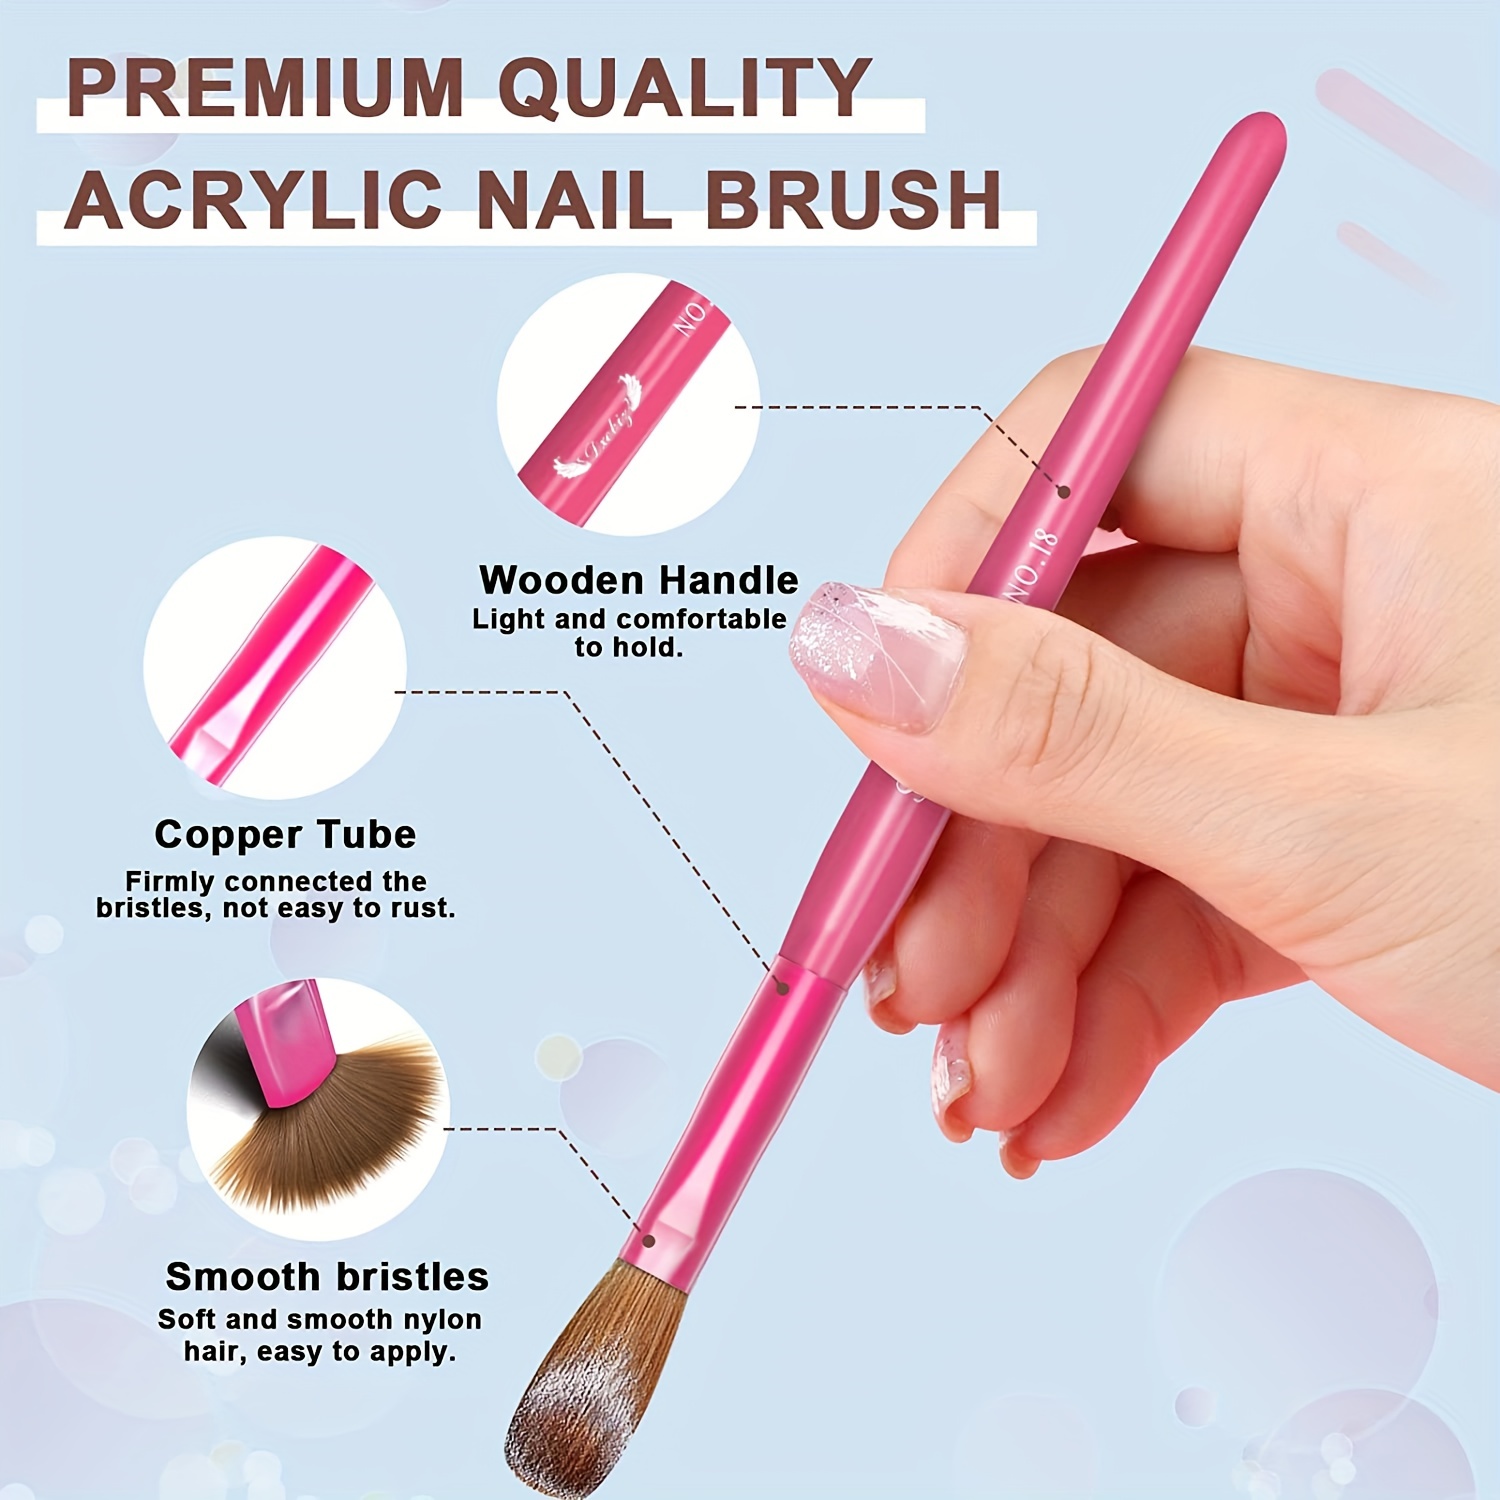 Unique Bargains Nail Art Brushes Set Extension Gel Nail Art Design Pen Set Painting Tools for Acrylic Application 6 Pcs